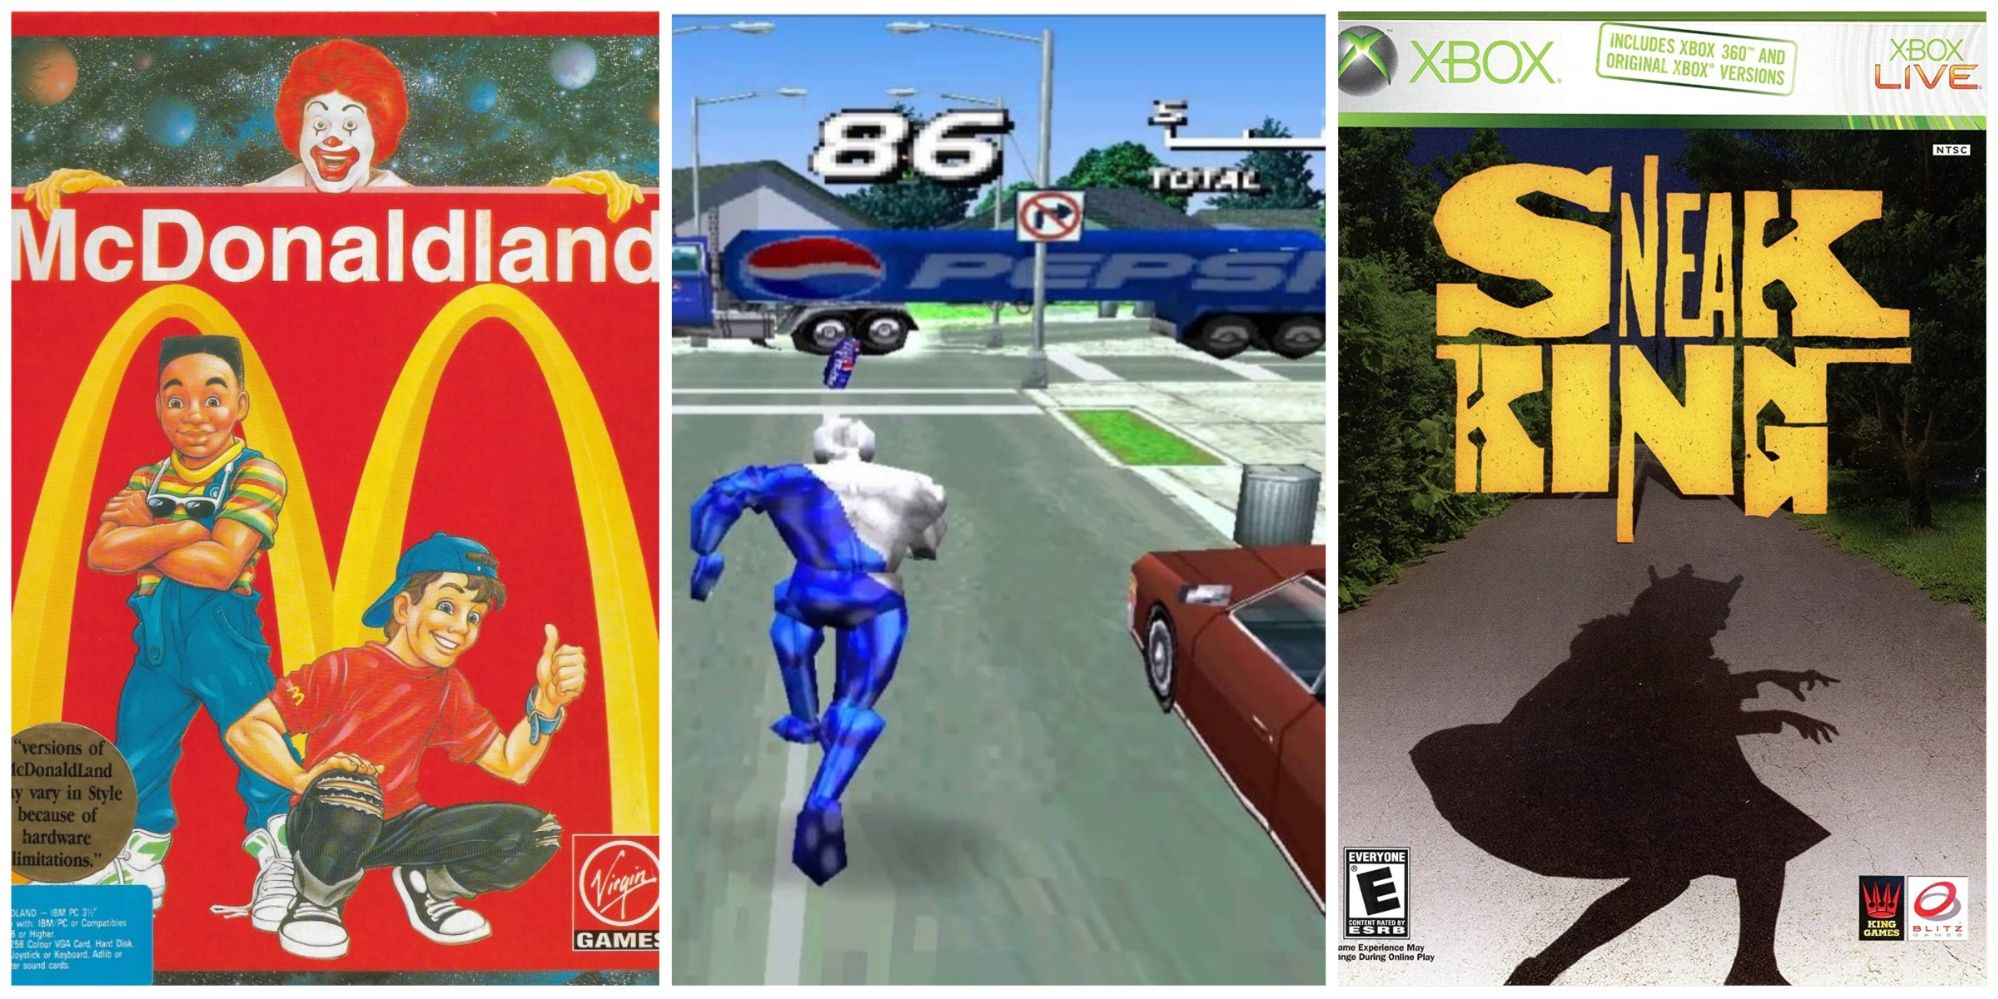 McDonaldland Box Art, Pepsiman Gameplay, Sneak King Box Art